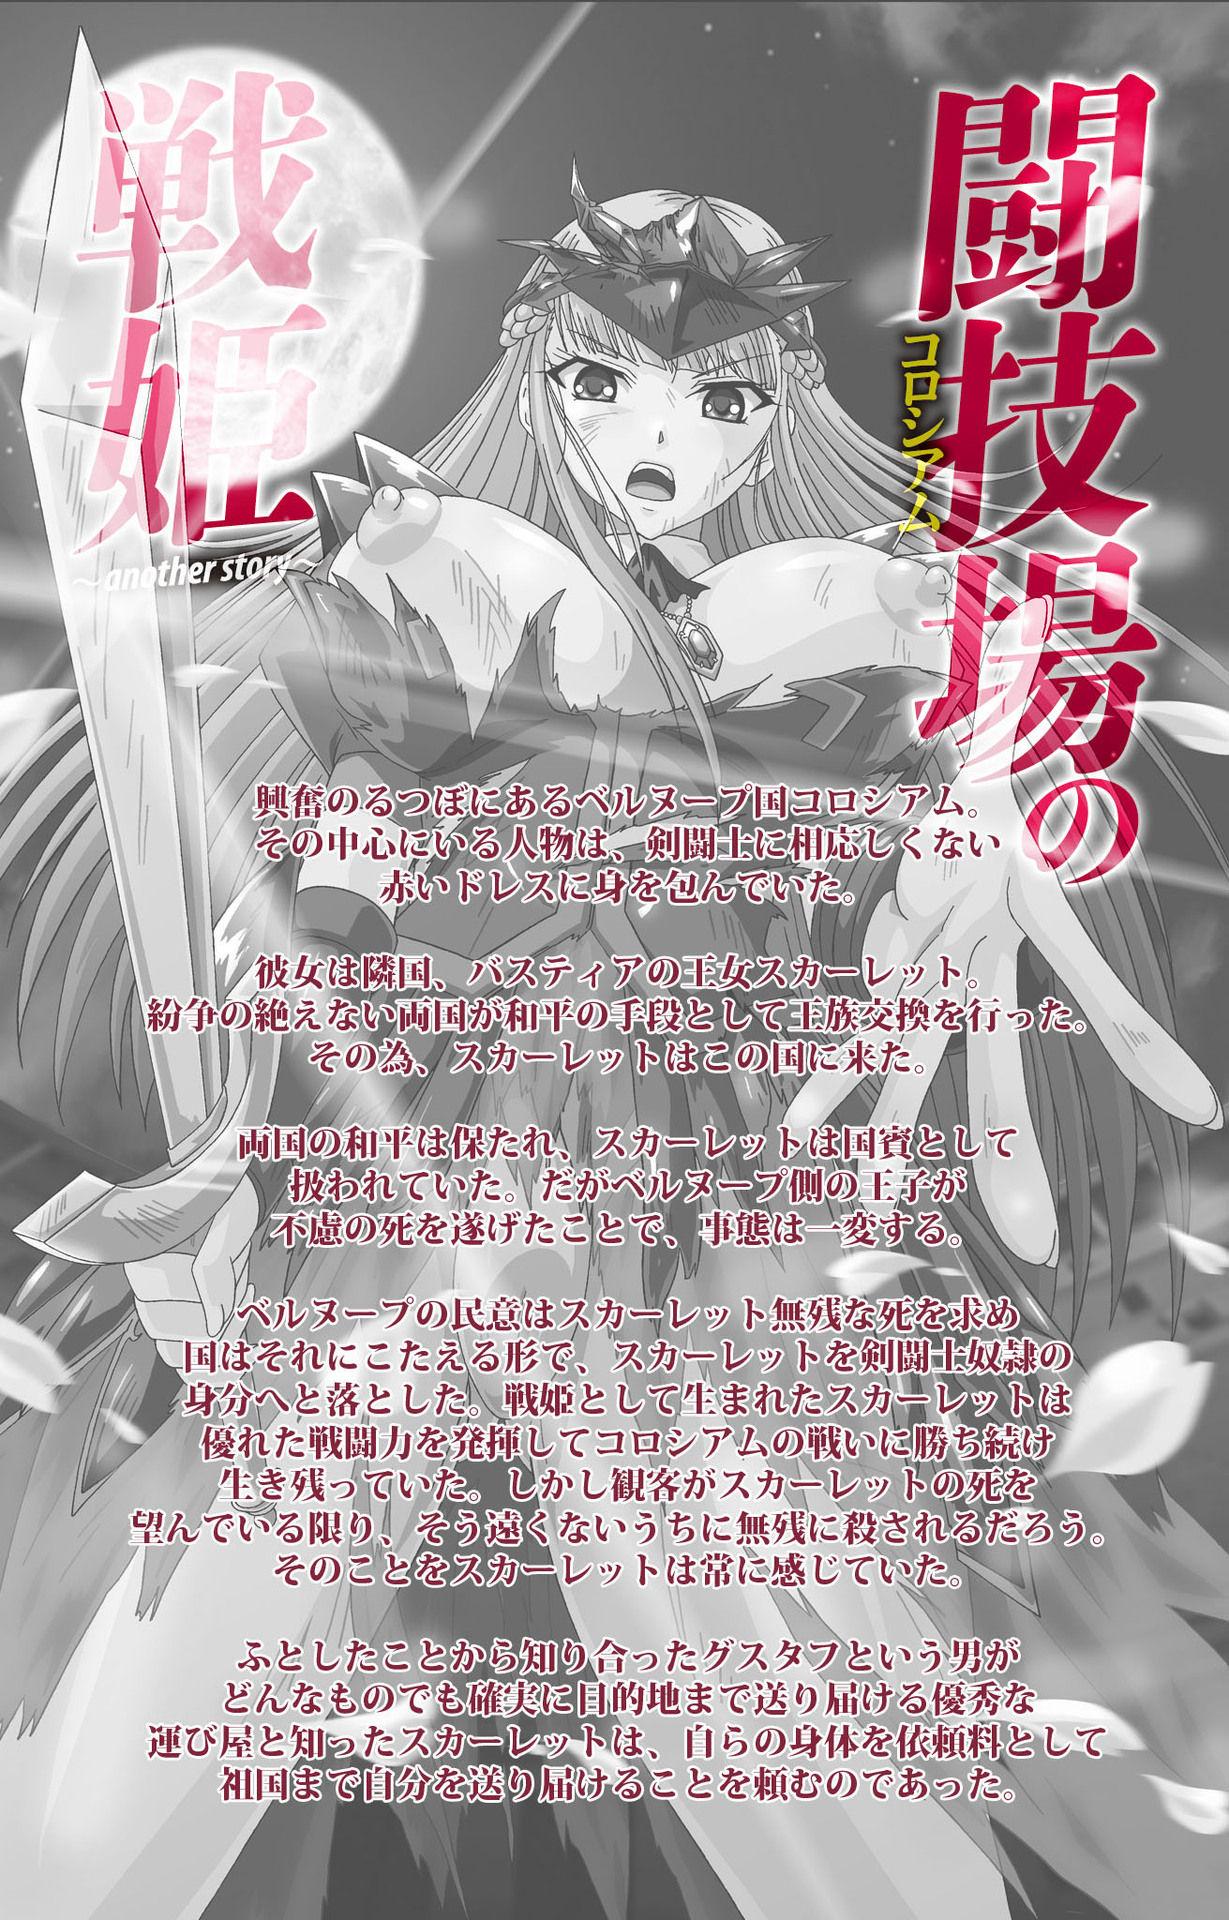 [Wakatsuki Hikaru] [Full Color Seijin Ban] Tougijou no Senki ~ another story ~ Complete Ban 1